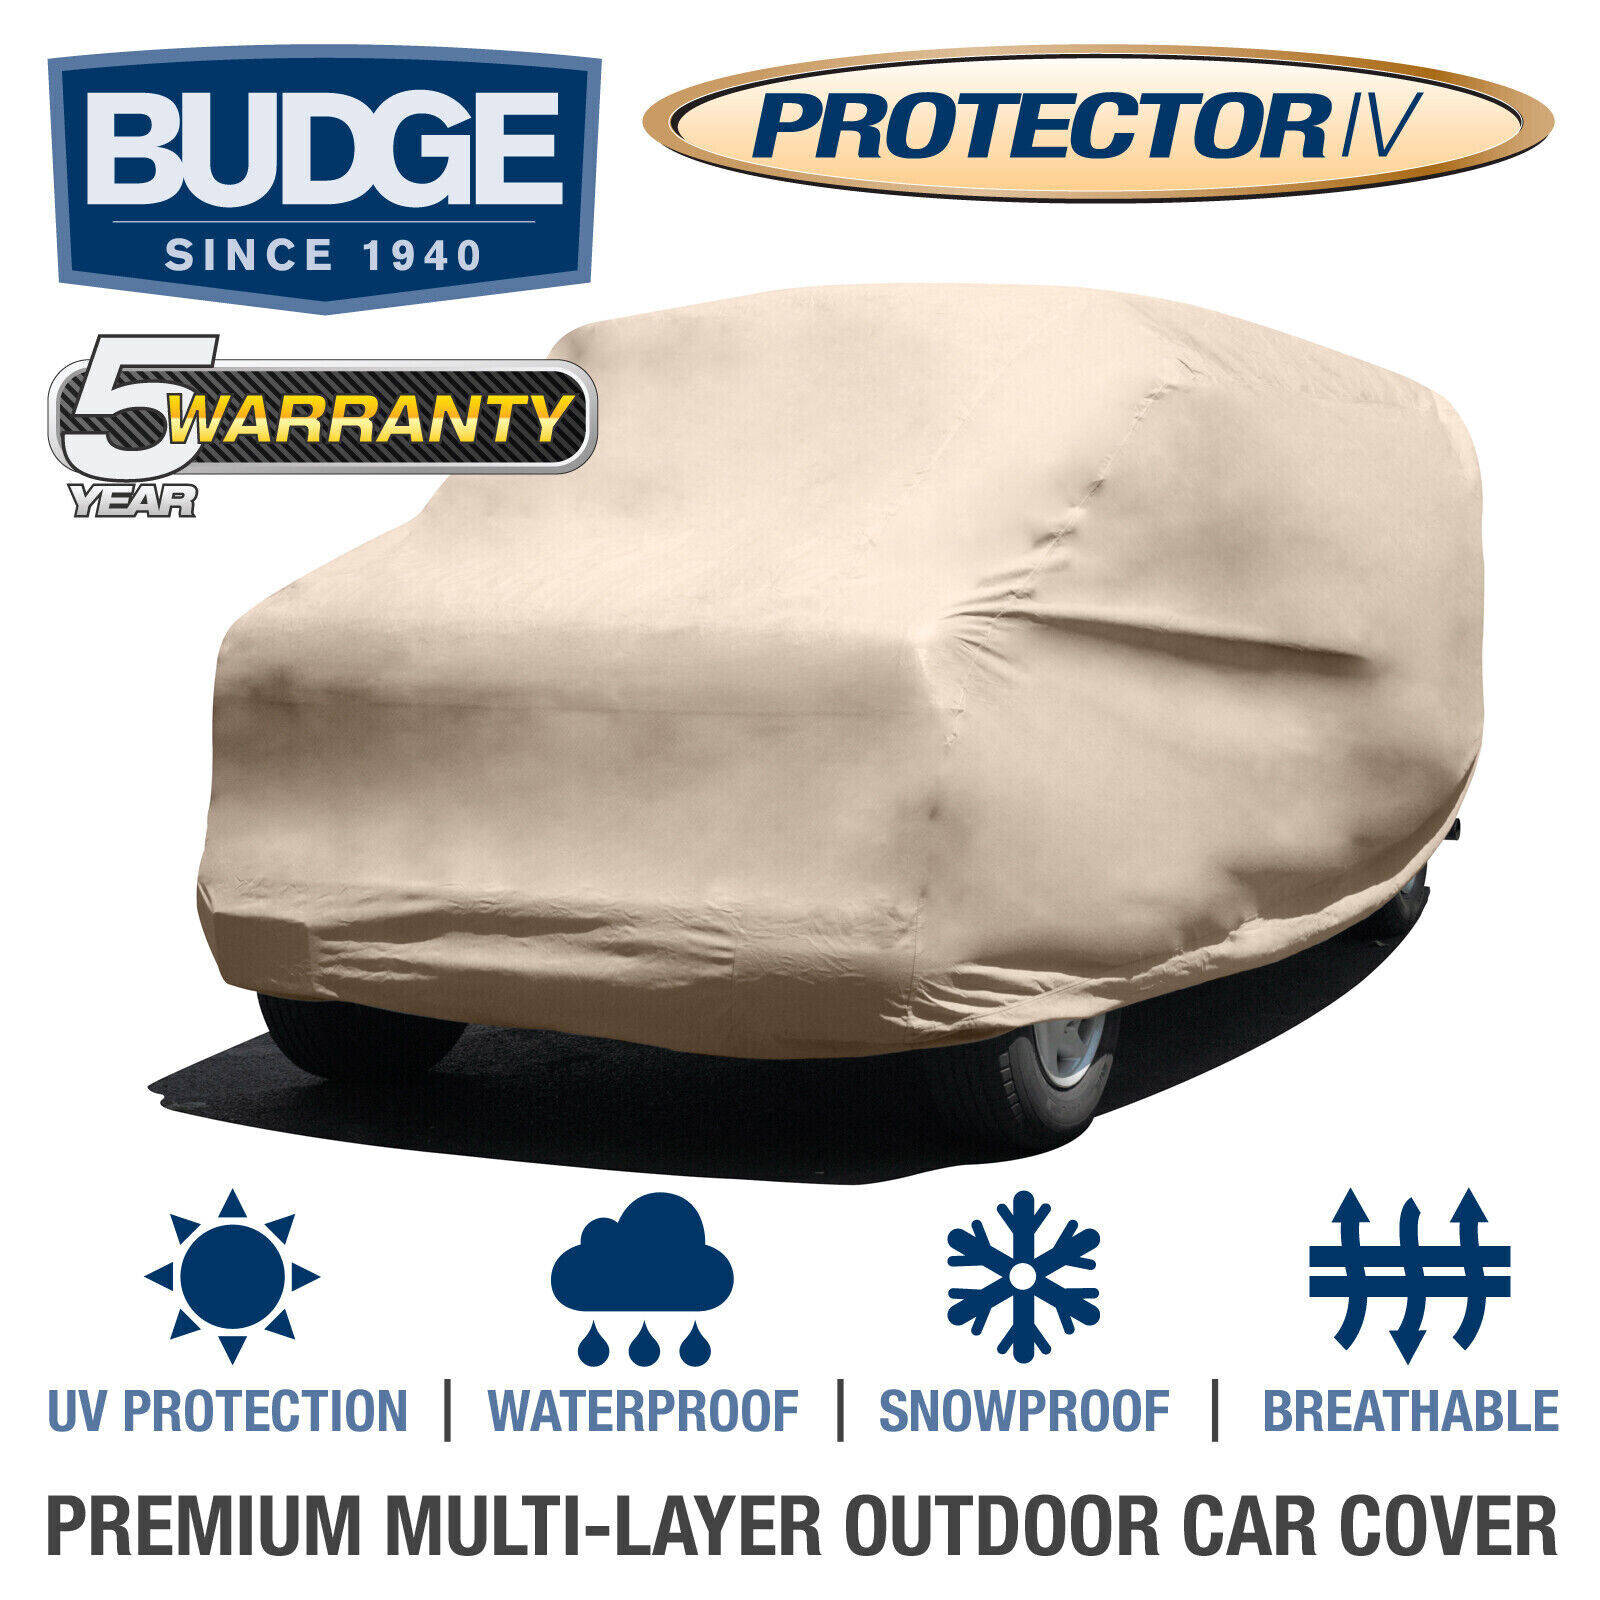 Budge Protector IV Van Cover Fits Standard Vans up to 19\'6\